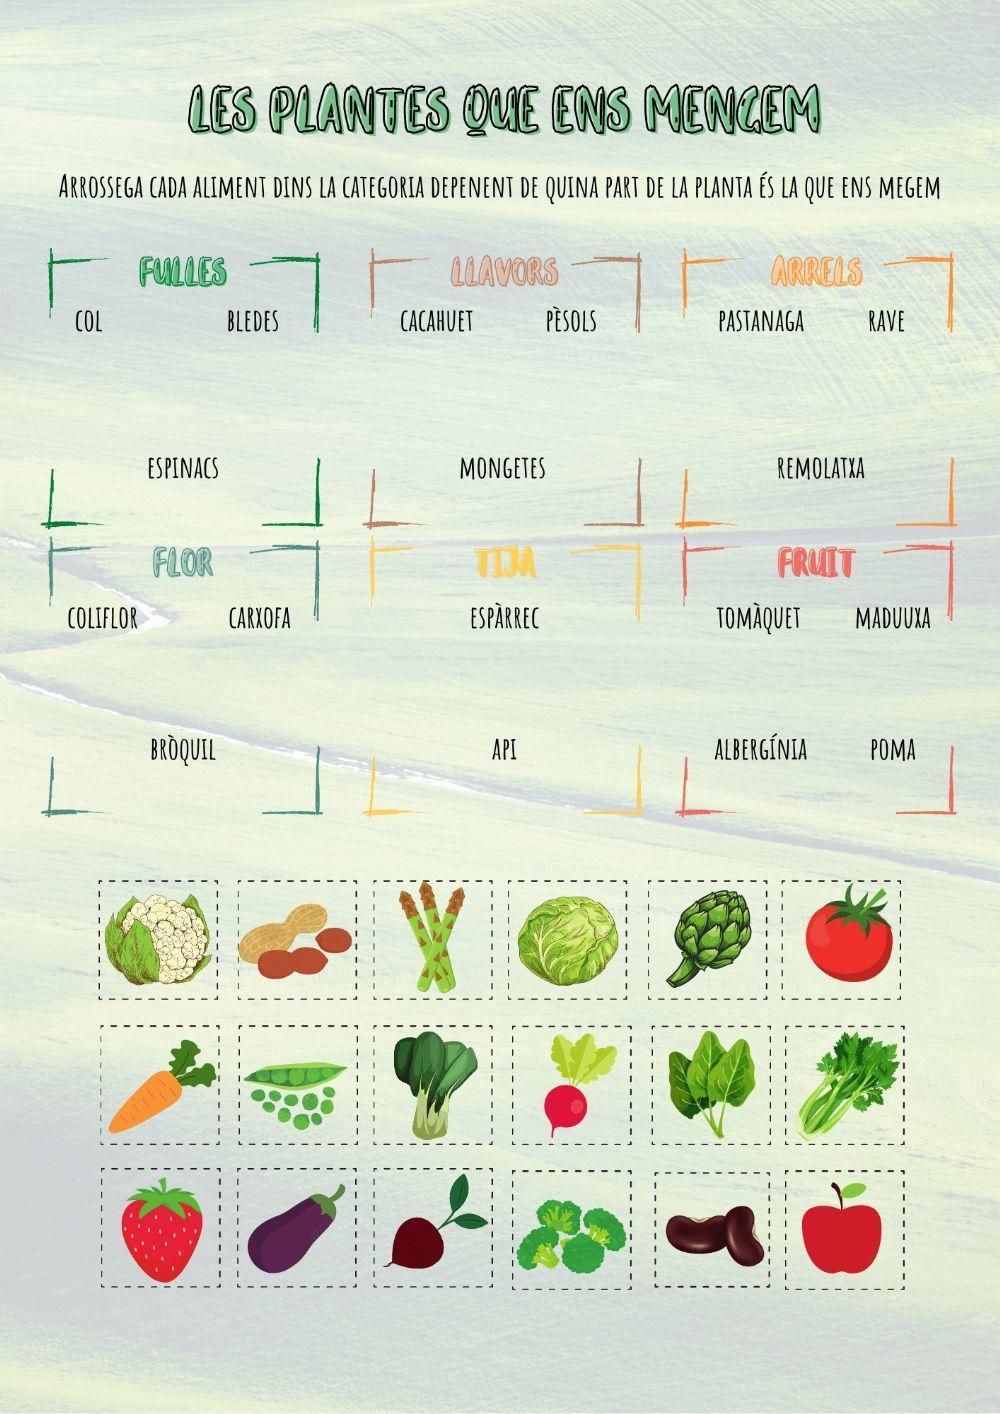 Les plantes que mengem